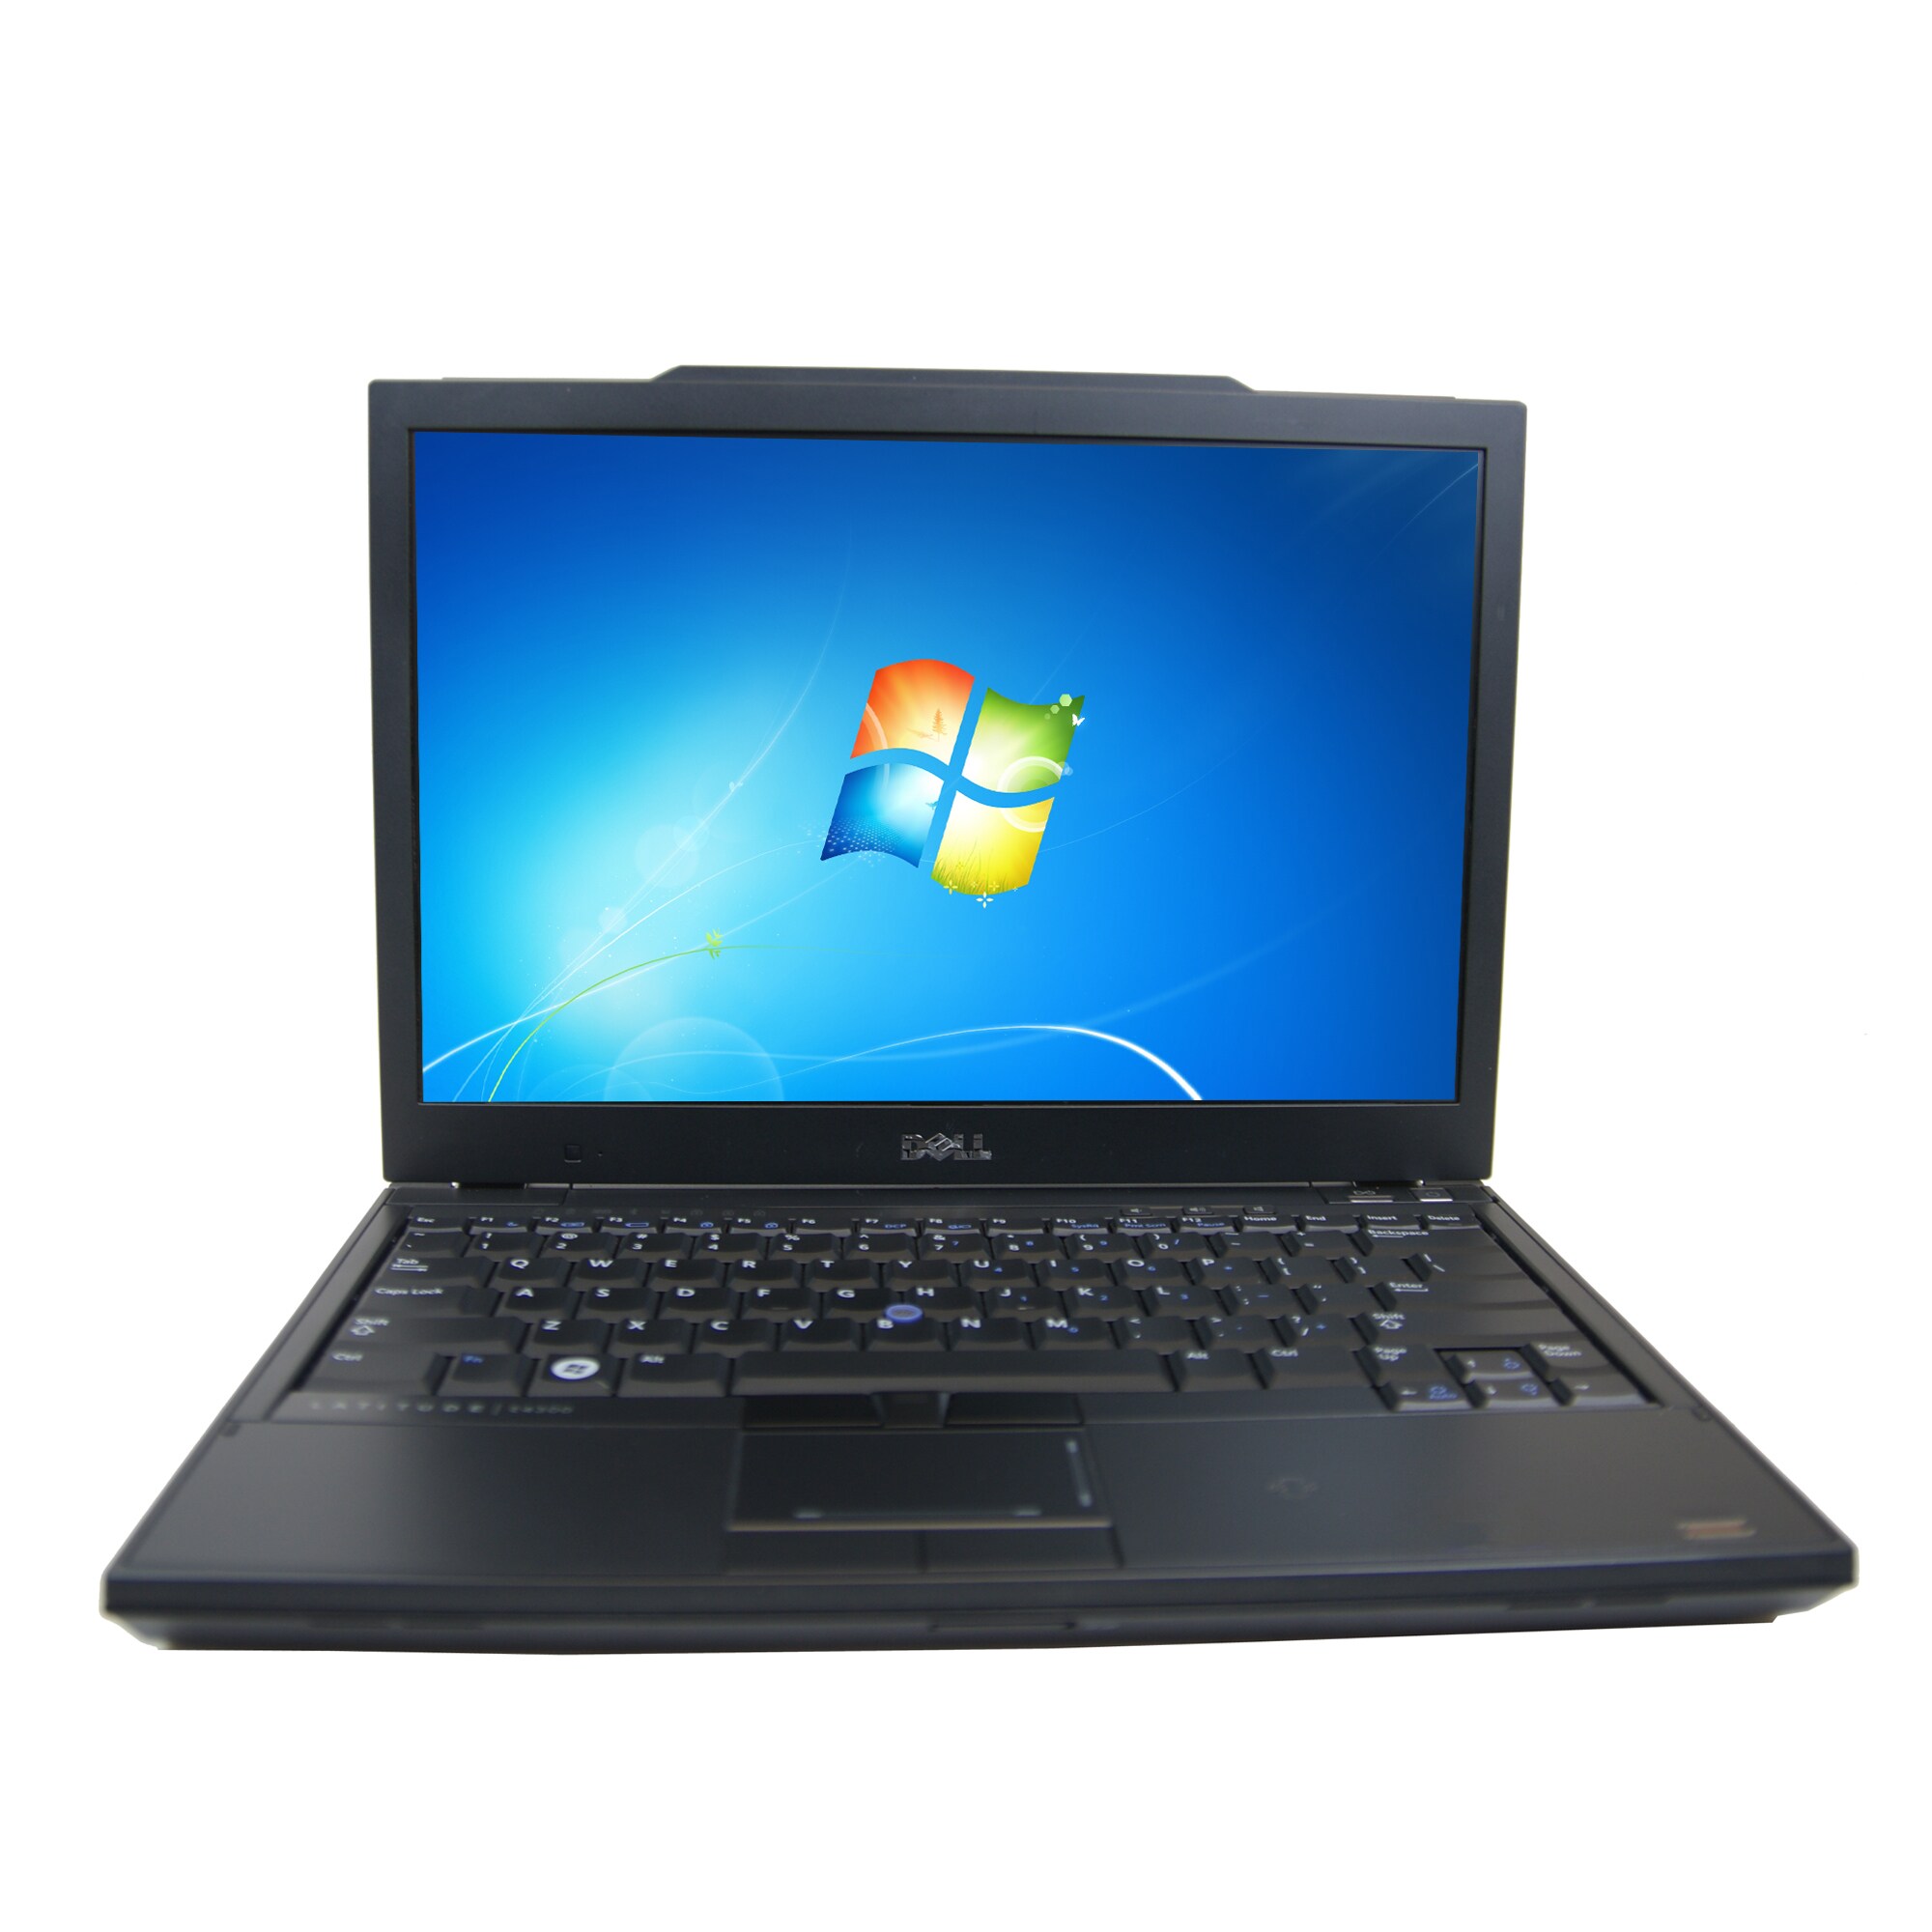 Shop Dell Latitude E4300 Intel Core 2 Duo 2 53ghz Cpu 4gb Ram 3gb Hdd Windows 10 Home 13 3 Inch Laptop Overstock